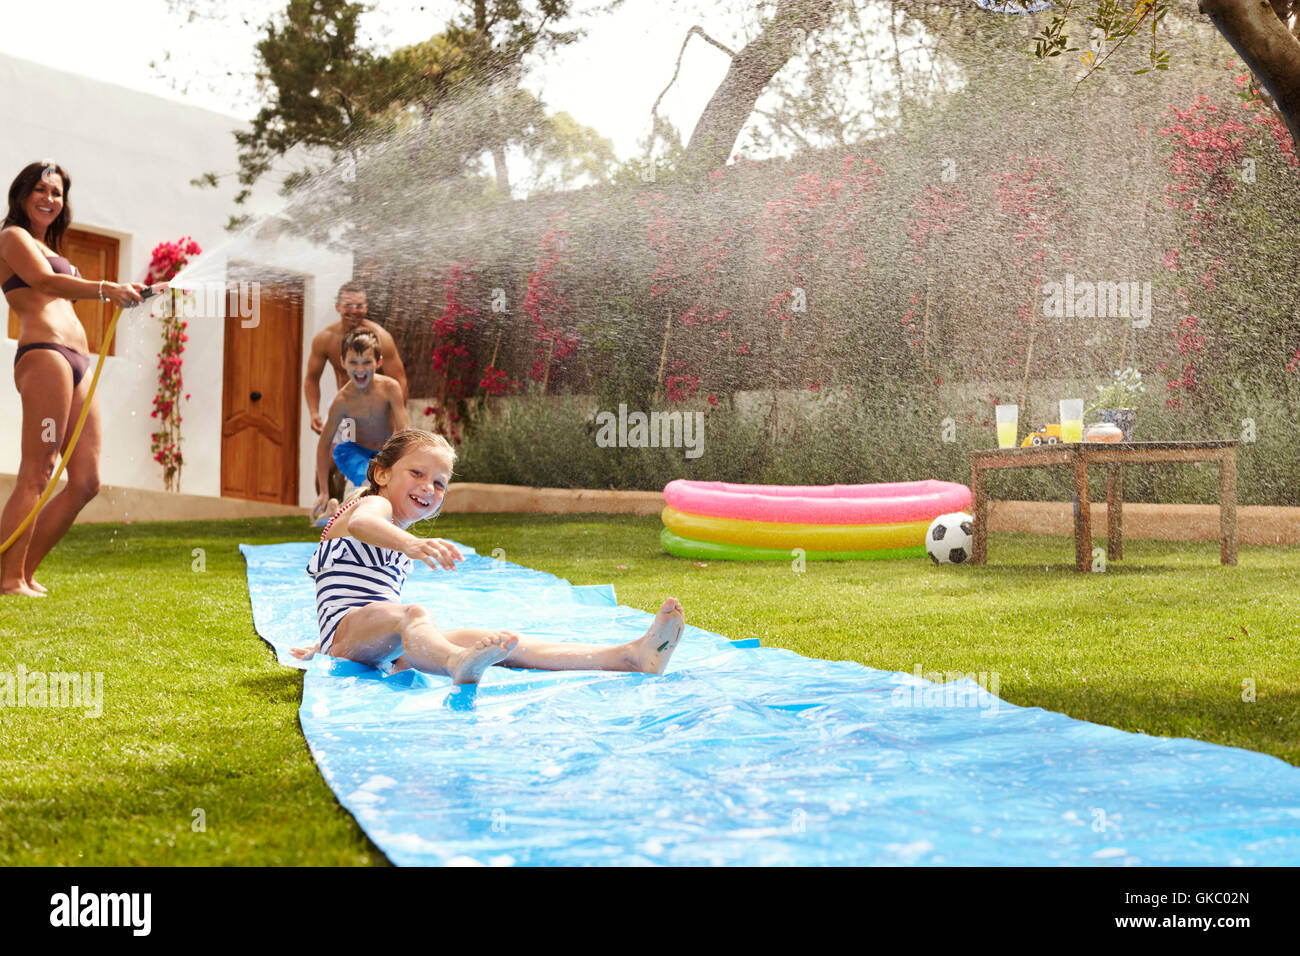 Family Having Fun On Water Slide In Garden Stock Photo